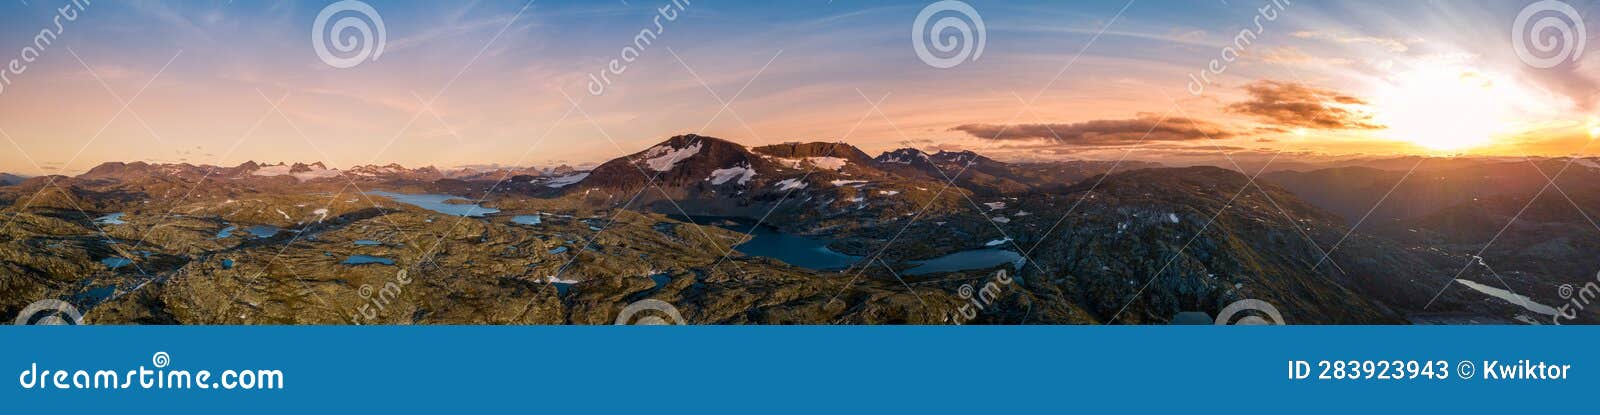 jotunheimen mountain range at sunset beautiful norway landscape aerial panorama